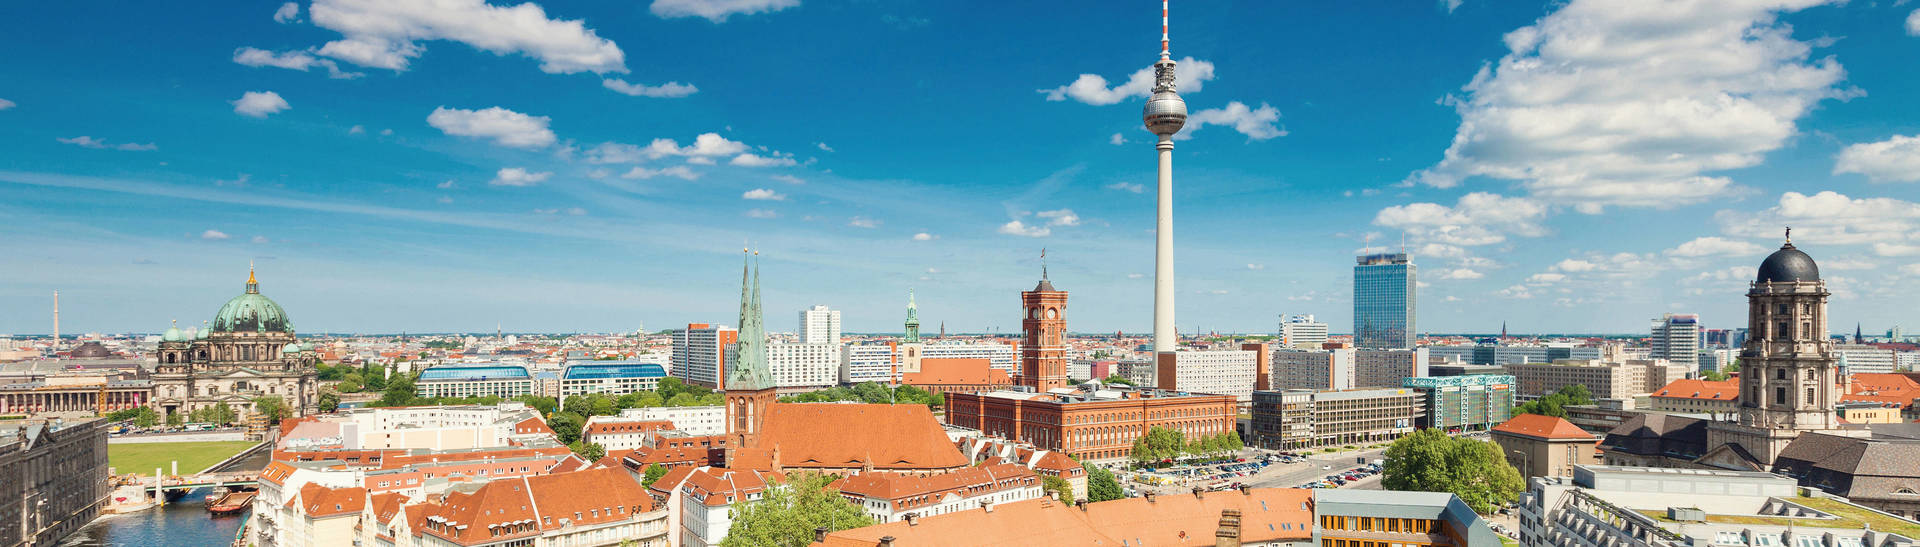 H4 Hotel Berlin Alexanderplatz лежит в самом центре города